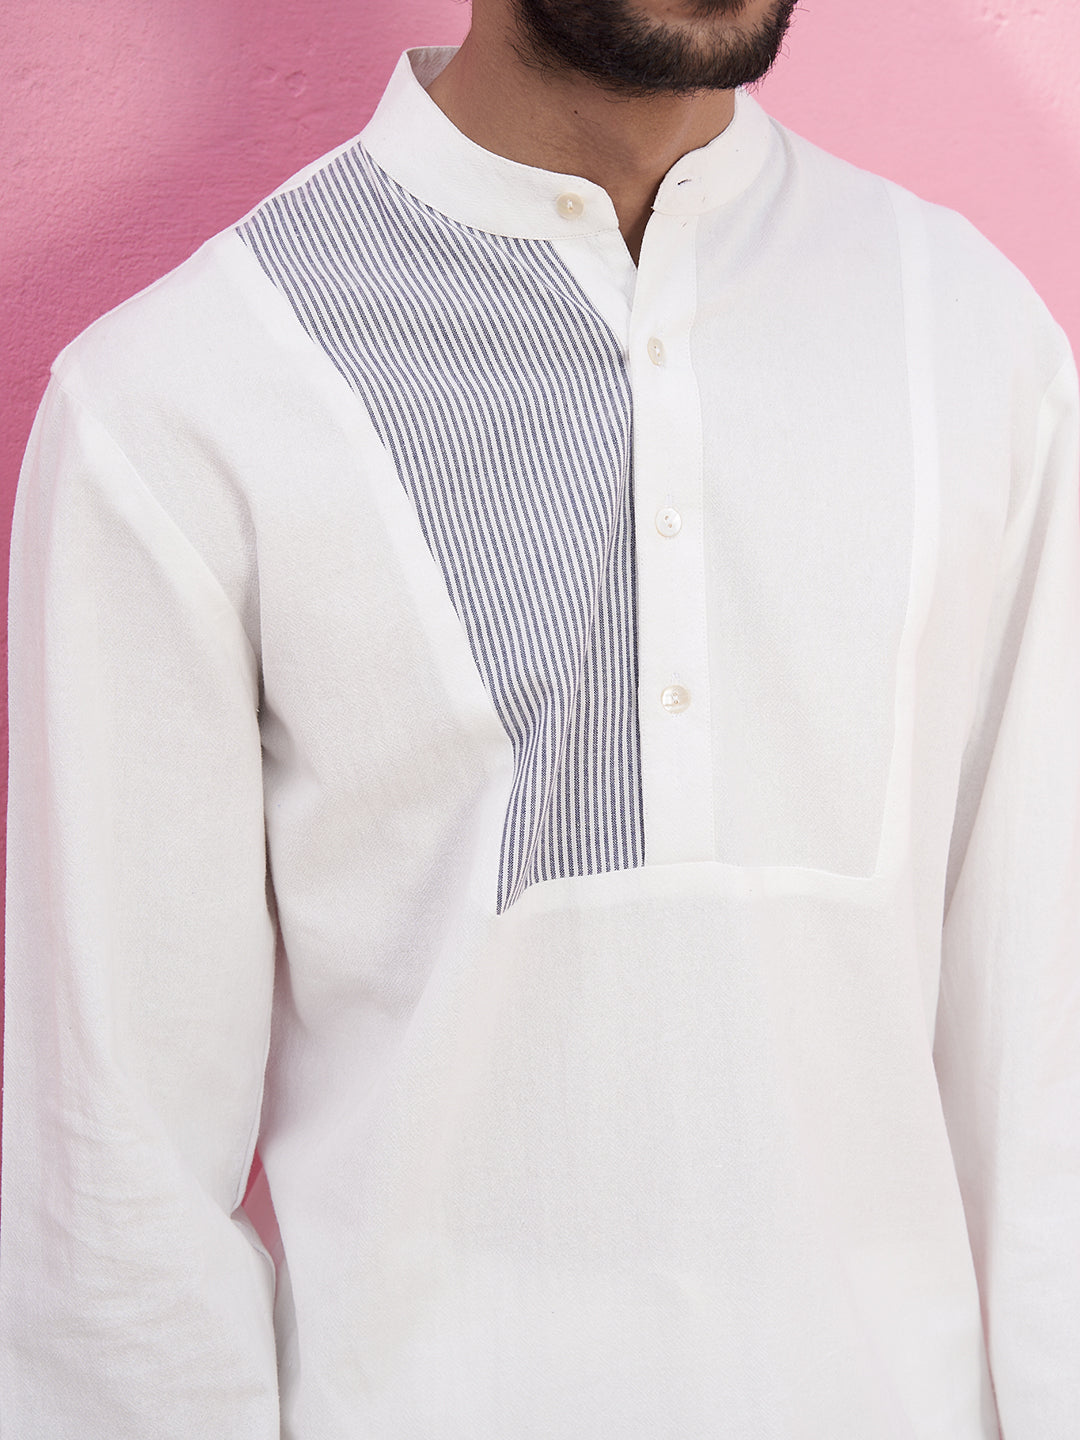 White Shirt kurta with striped neck yoke